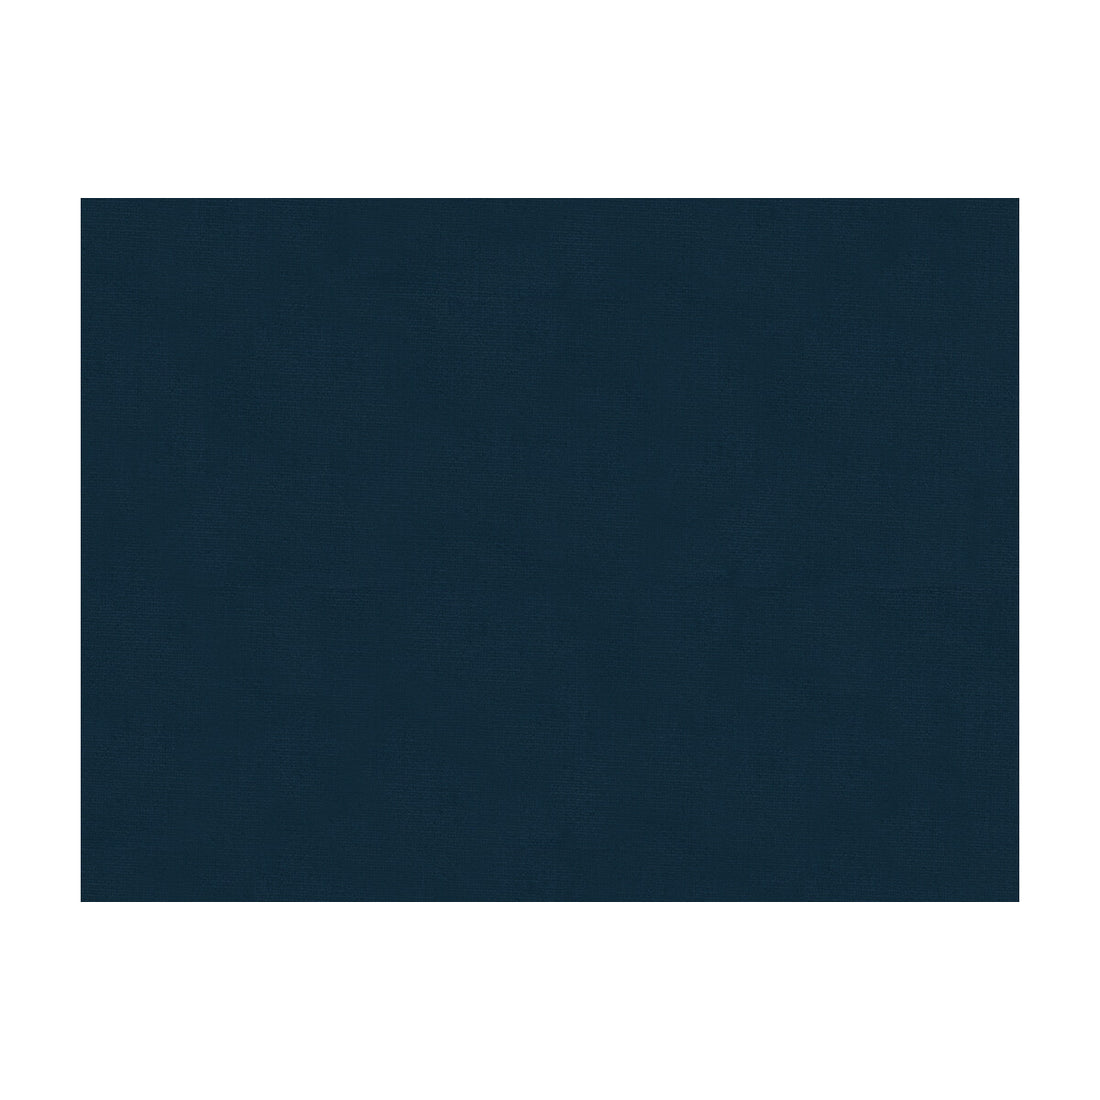 Windsor fabric in basilica blue color - pattern NF-WINDSOR.64.0 - by Lee Jofa